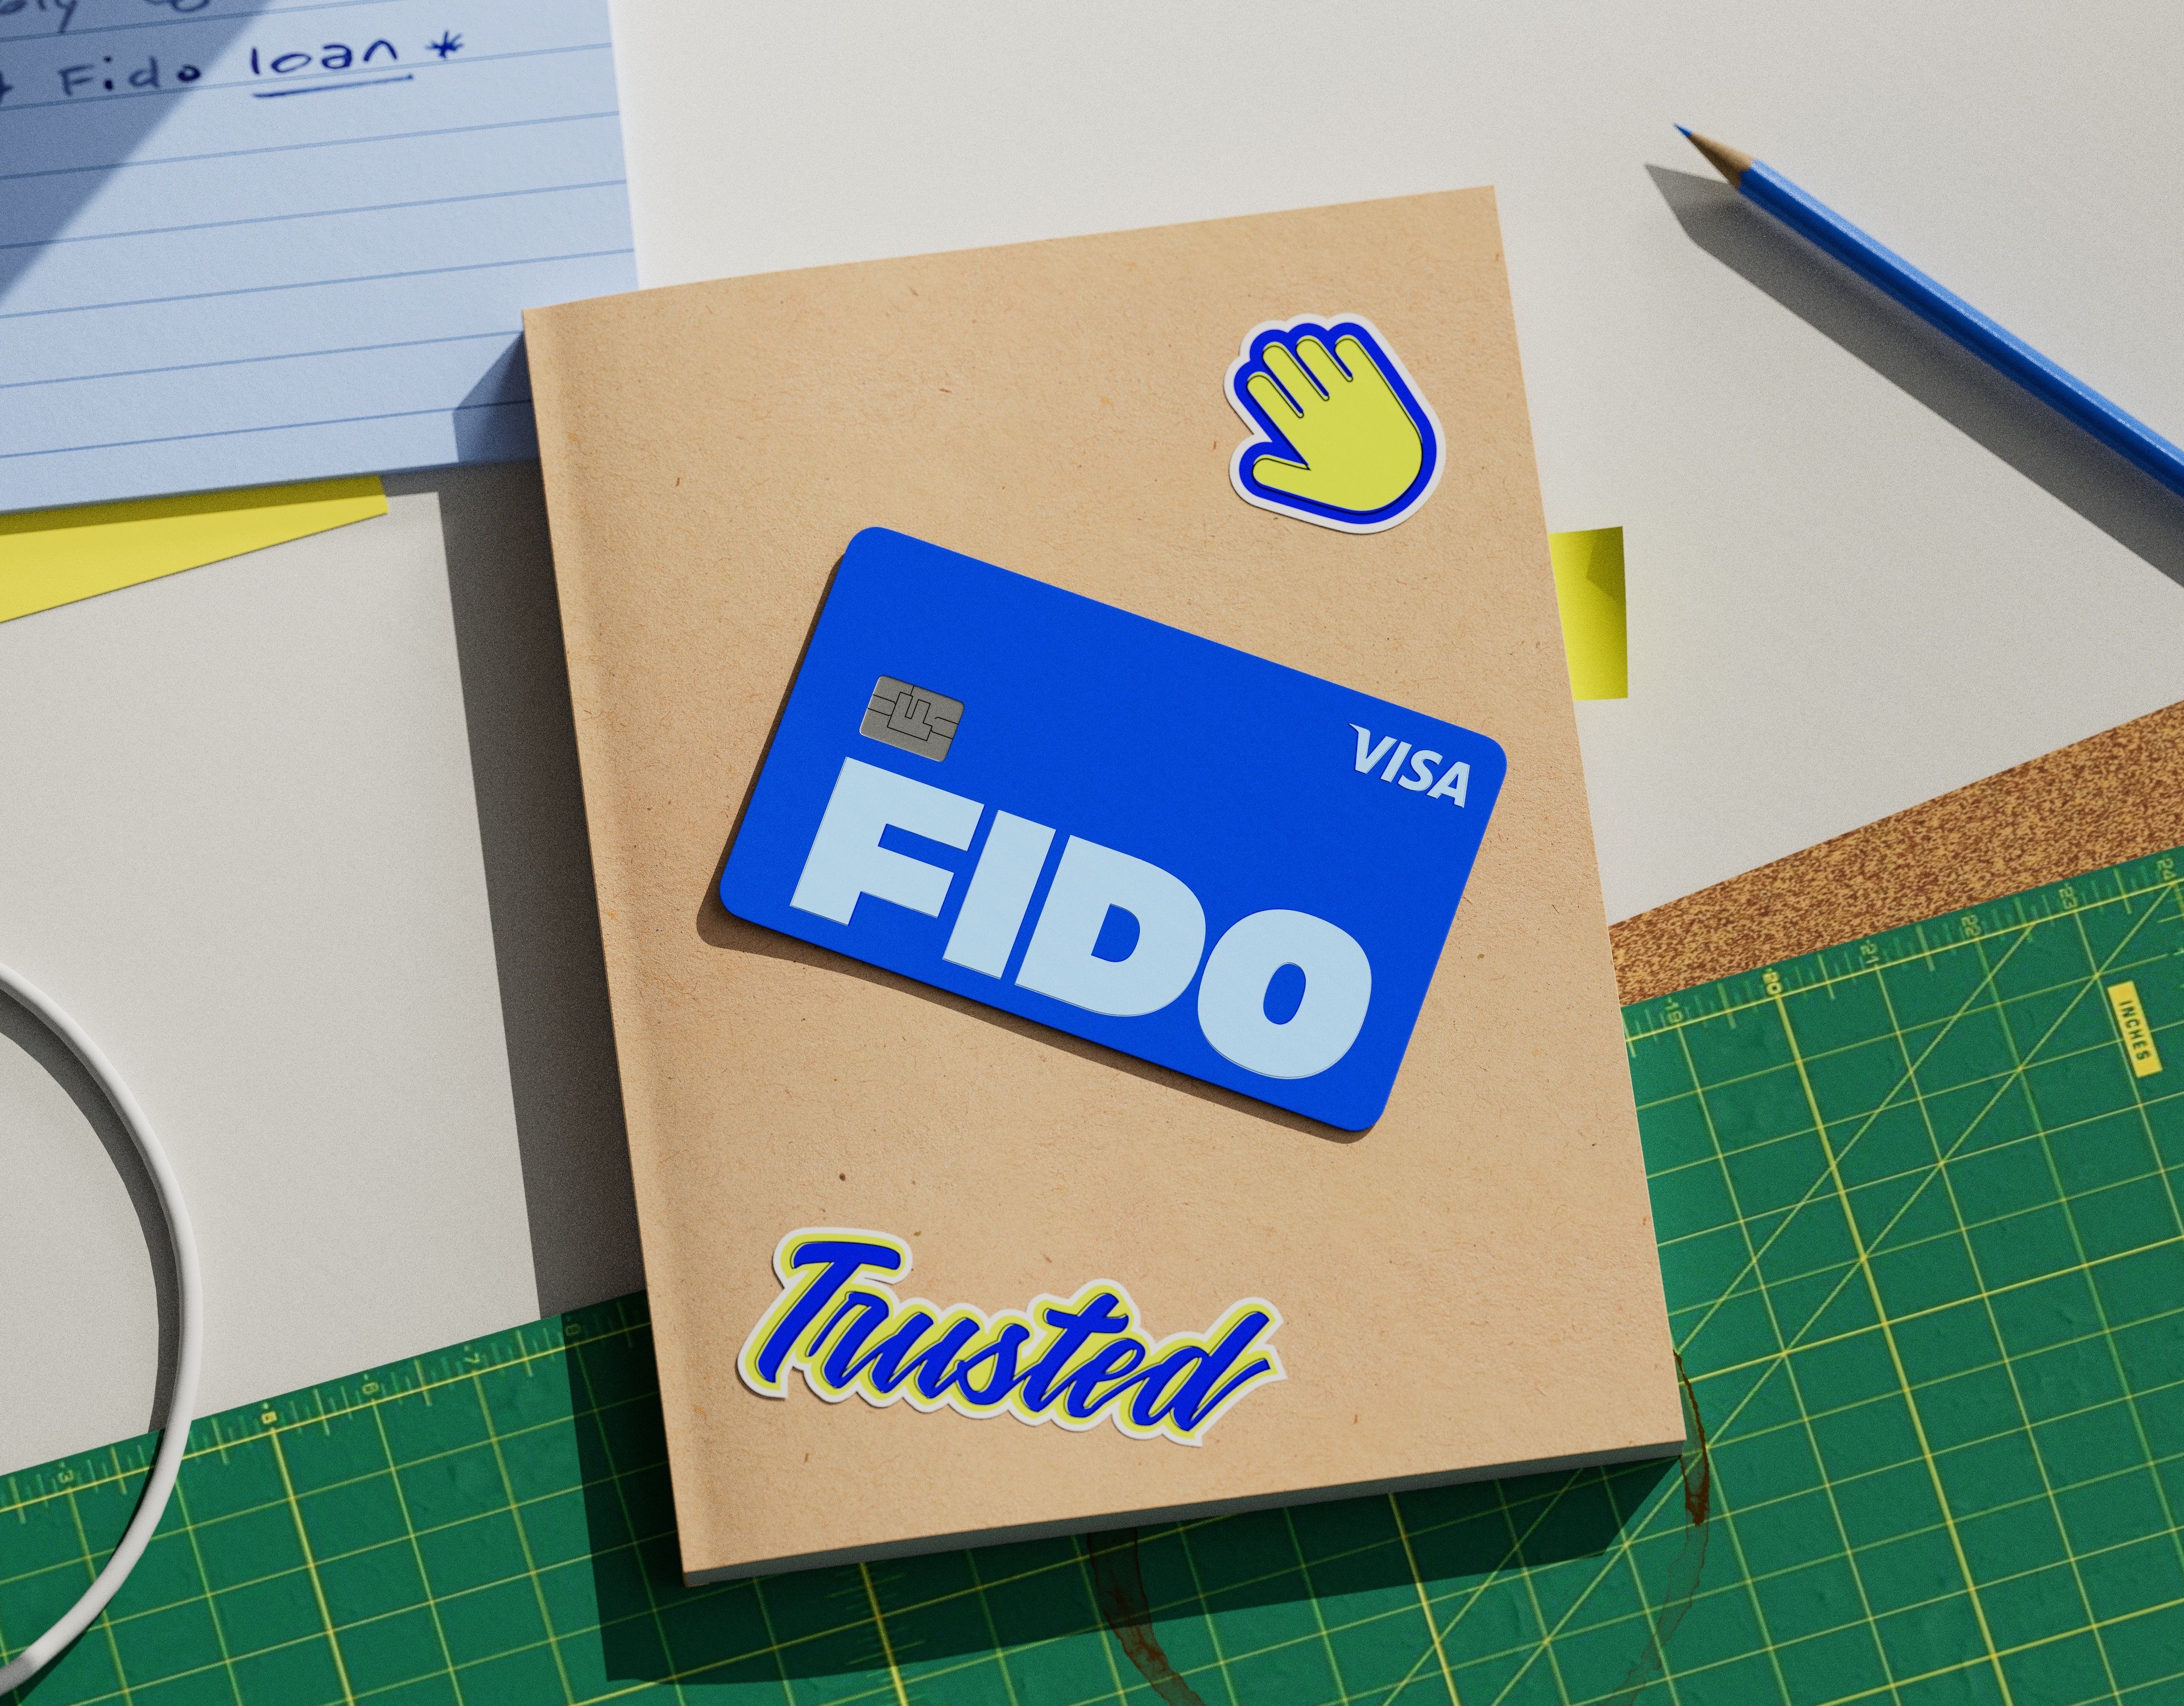 The Brand–Identity feature: FIDO